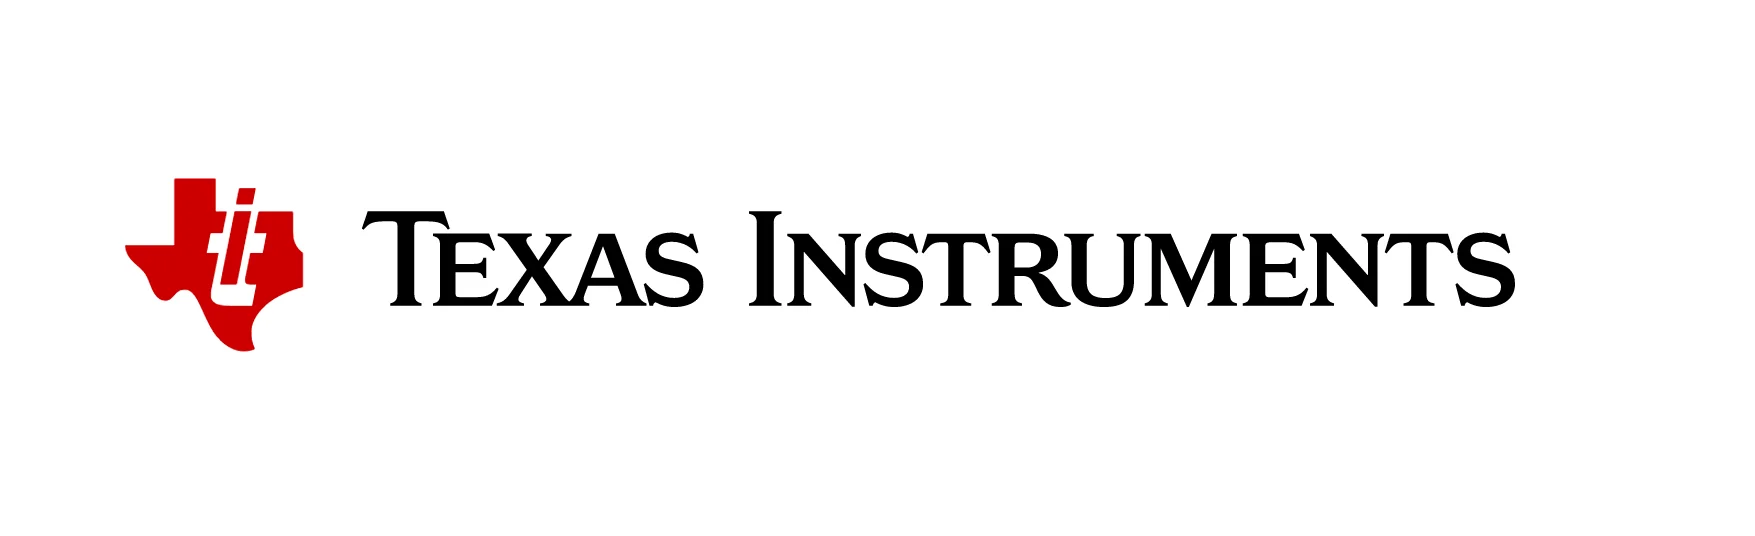 6 16 54. Texas instruments logo. Логотип Техас инструмент. Texas instruments (ti). Diesel Texas instruments.